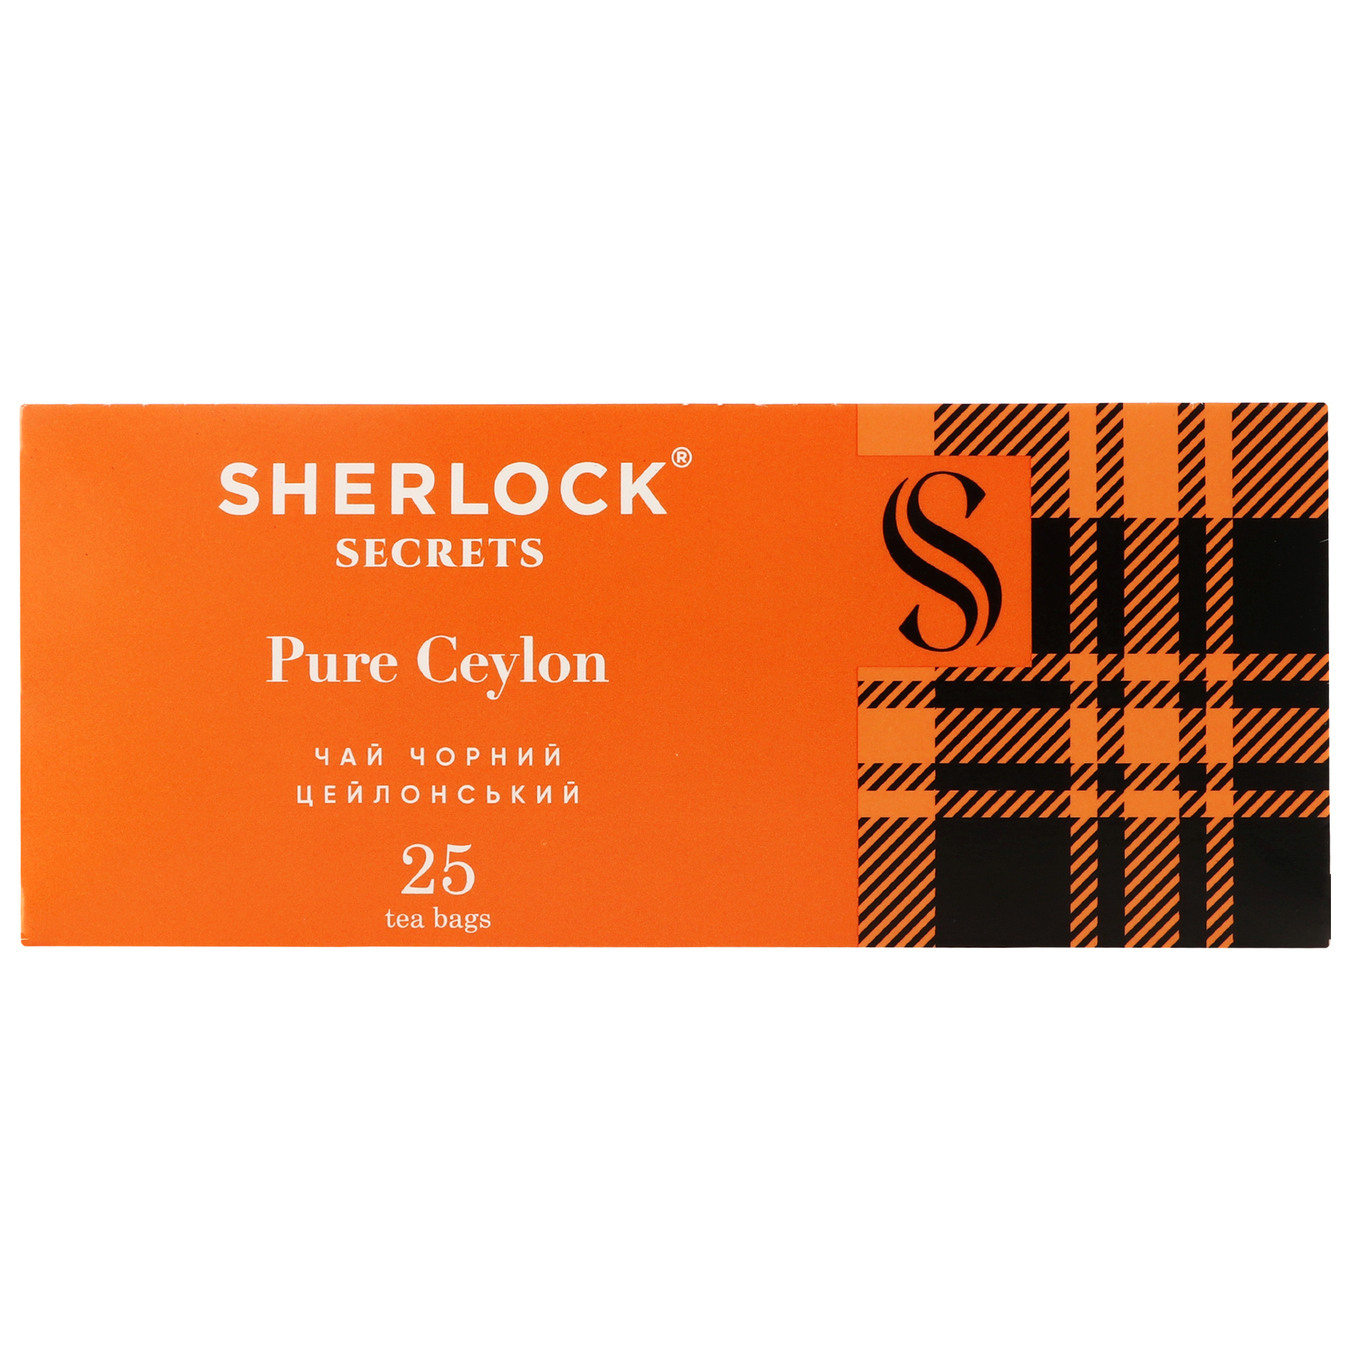 Black tea Sherlock Secrets Pure Ceylon Ceylonese bagged 25*2g